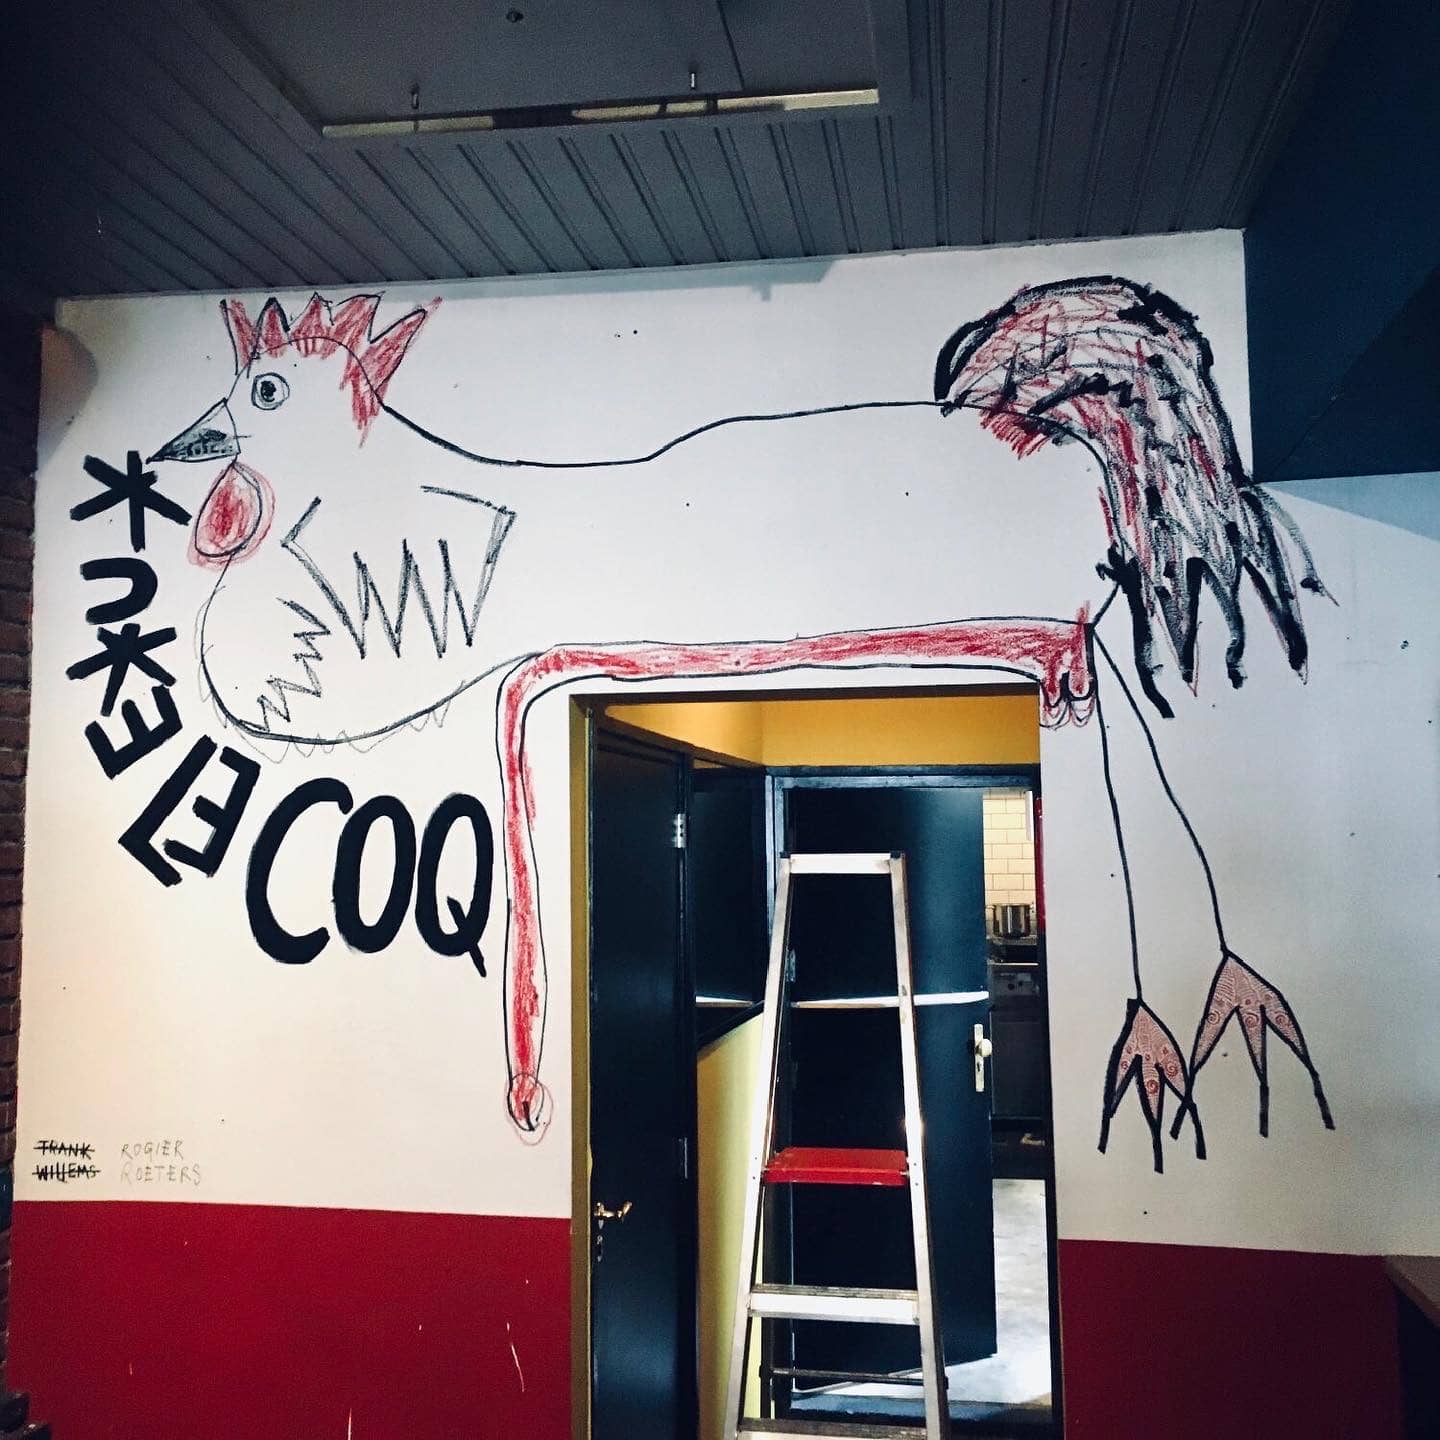 LE COQ ROUGE - Mural De Rooie Haen - 02 - Rogier Roeters x Frank Willems